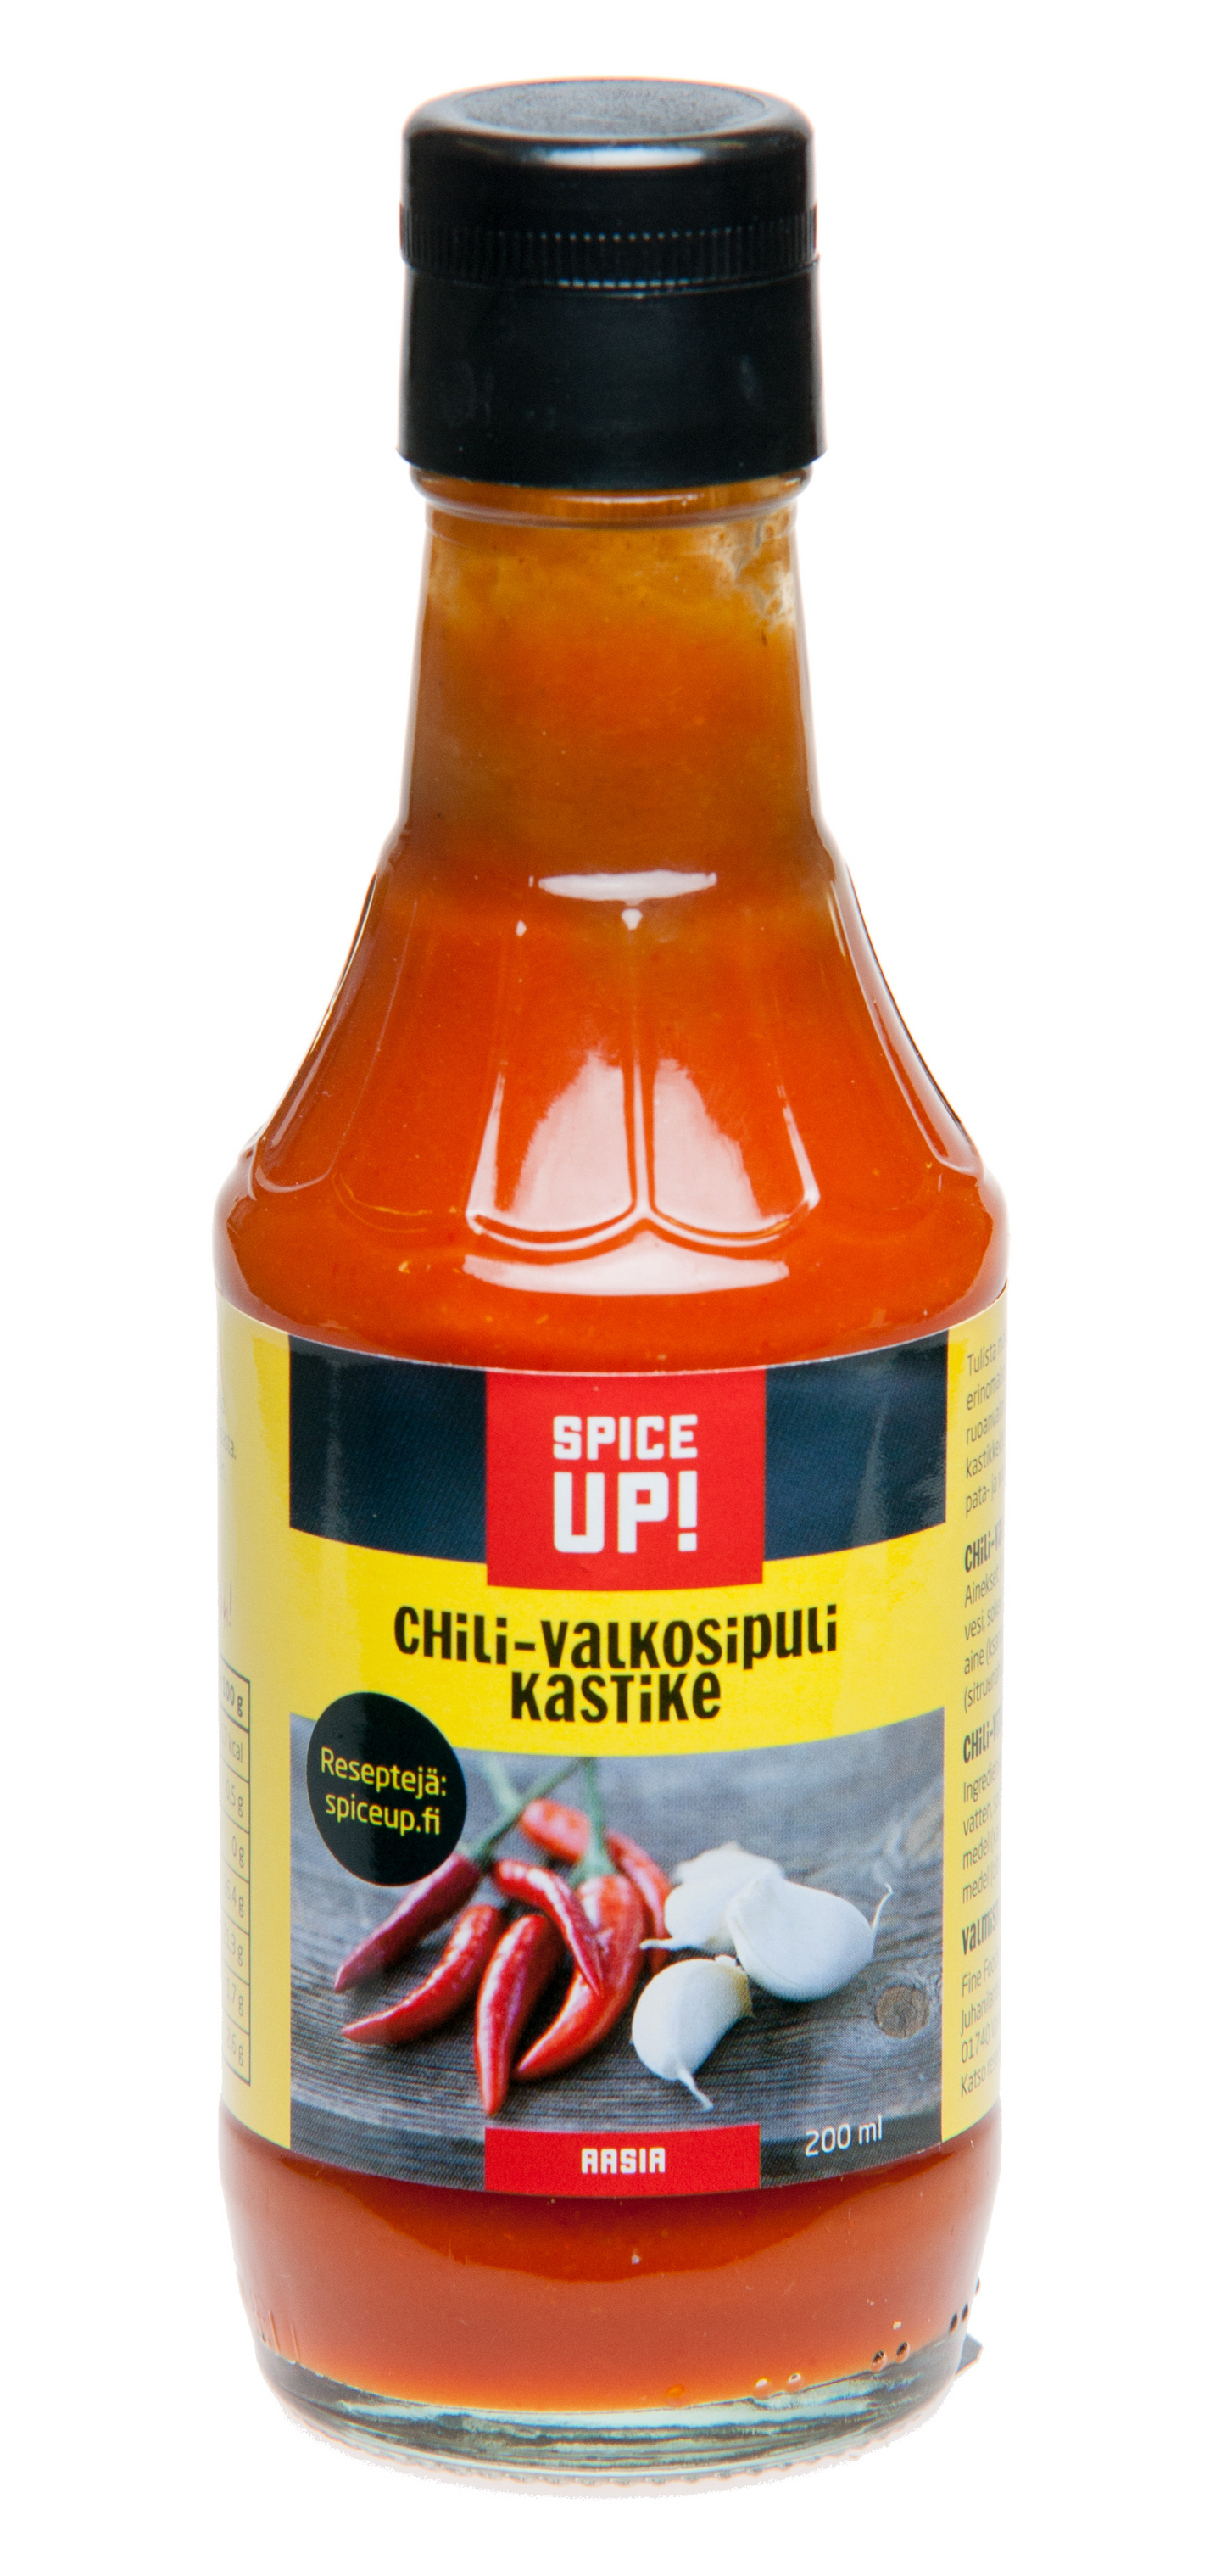 Spice Up! Chili-valkosipulikastike keskitulinen 200ml